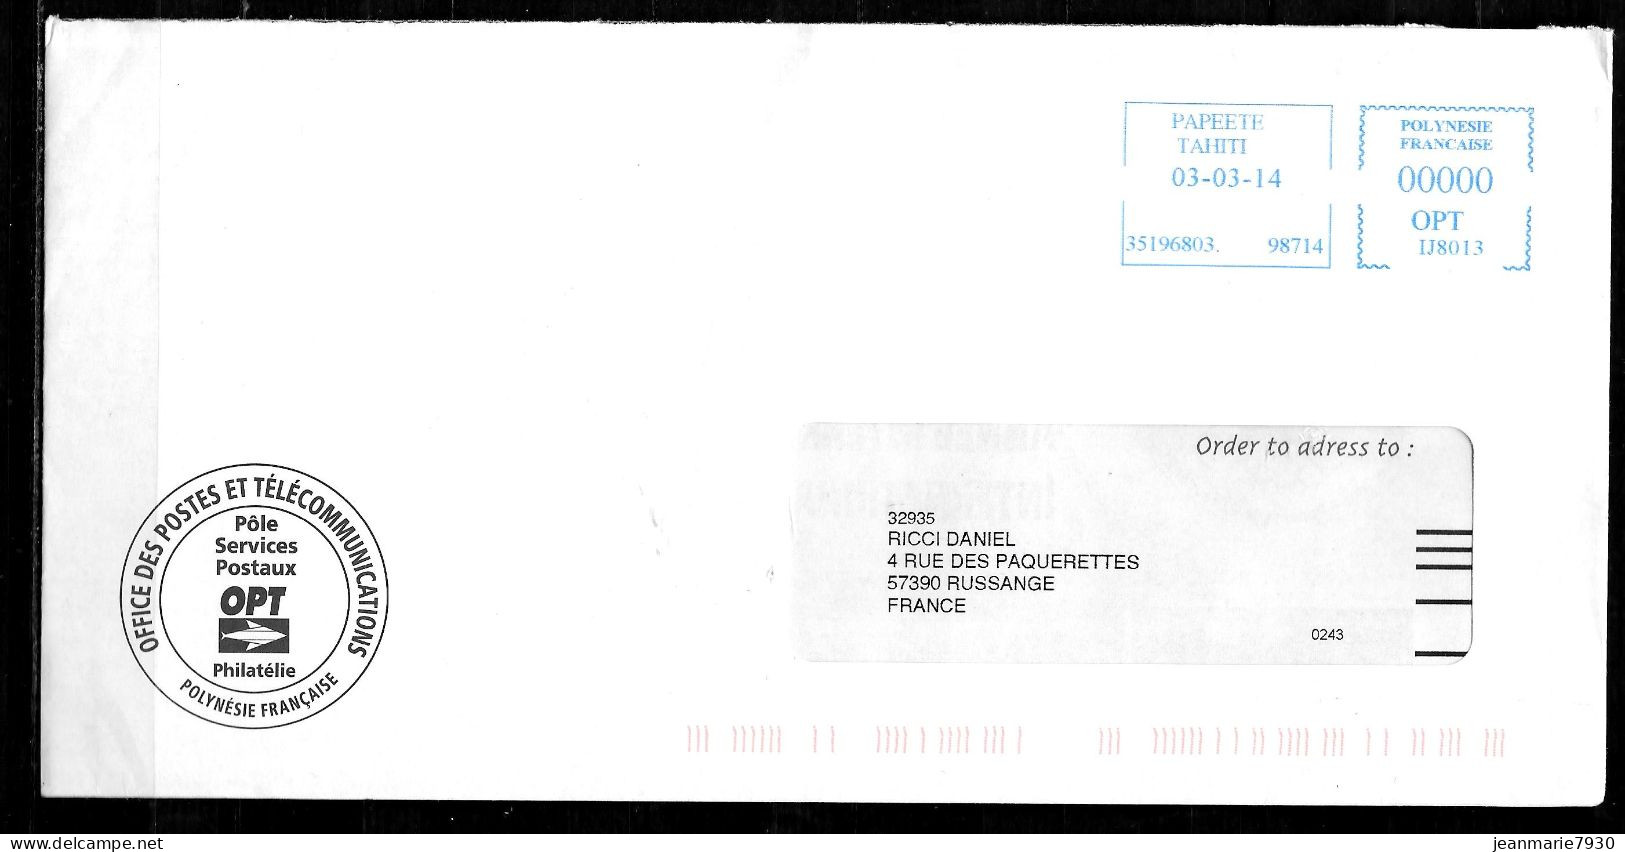 C493 - MACHINE A AFFRANCHIR - LETTRE DE PAPEETE TAHITI DU 03/03/2014 - IJ8013 - Briefe U. Dokumente